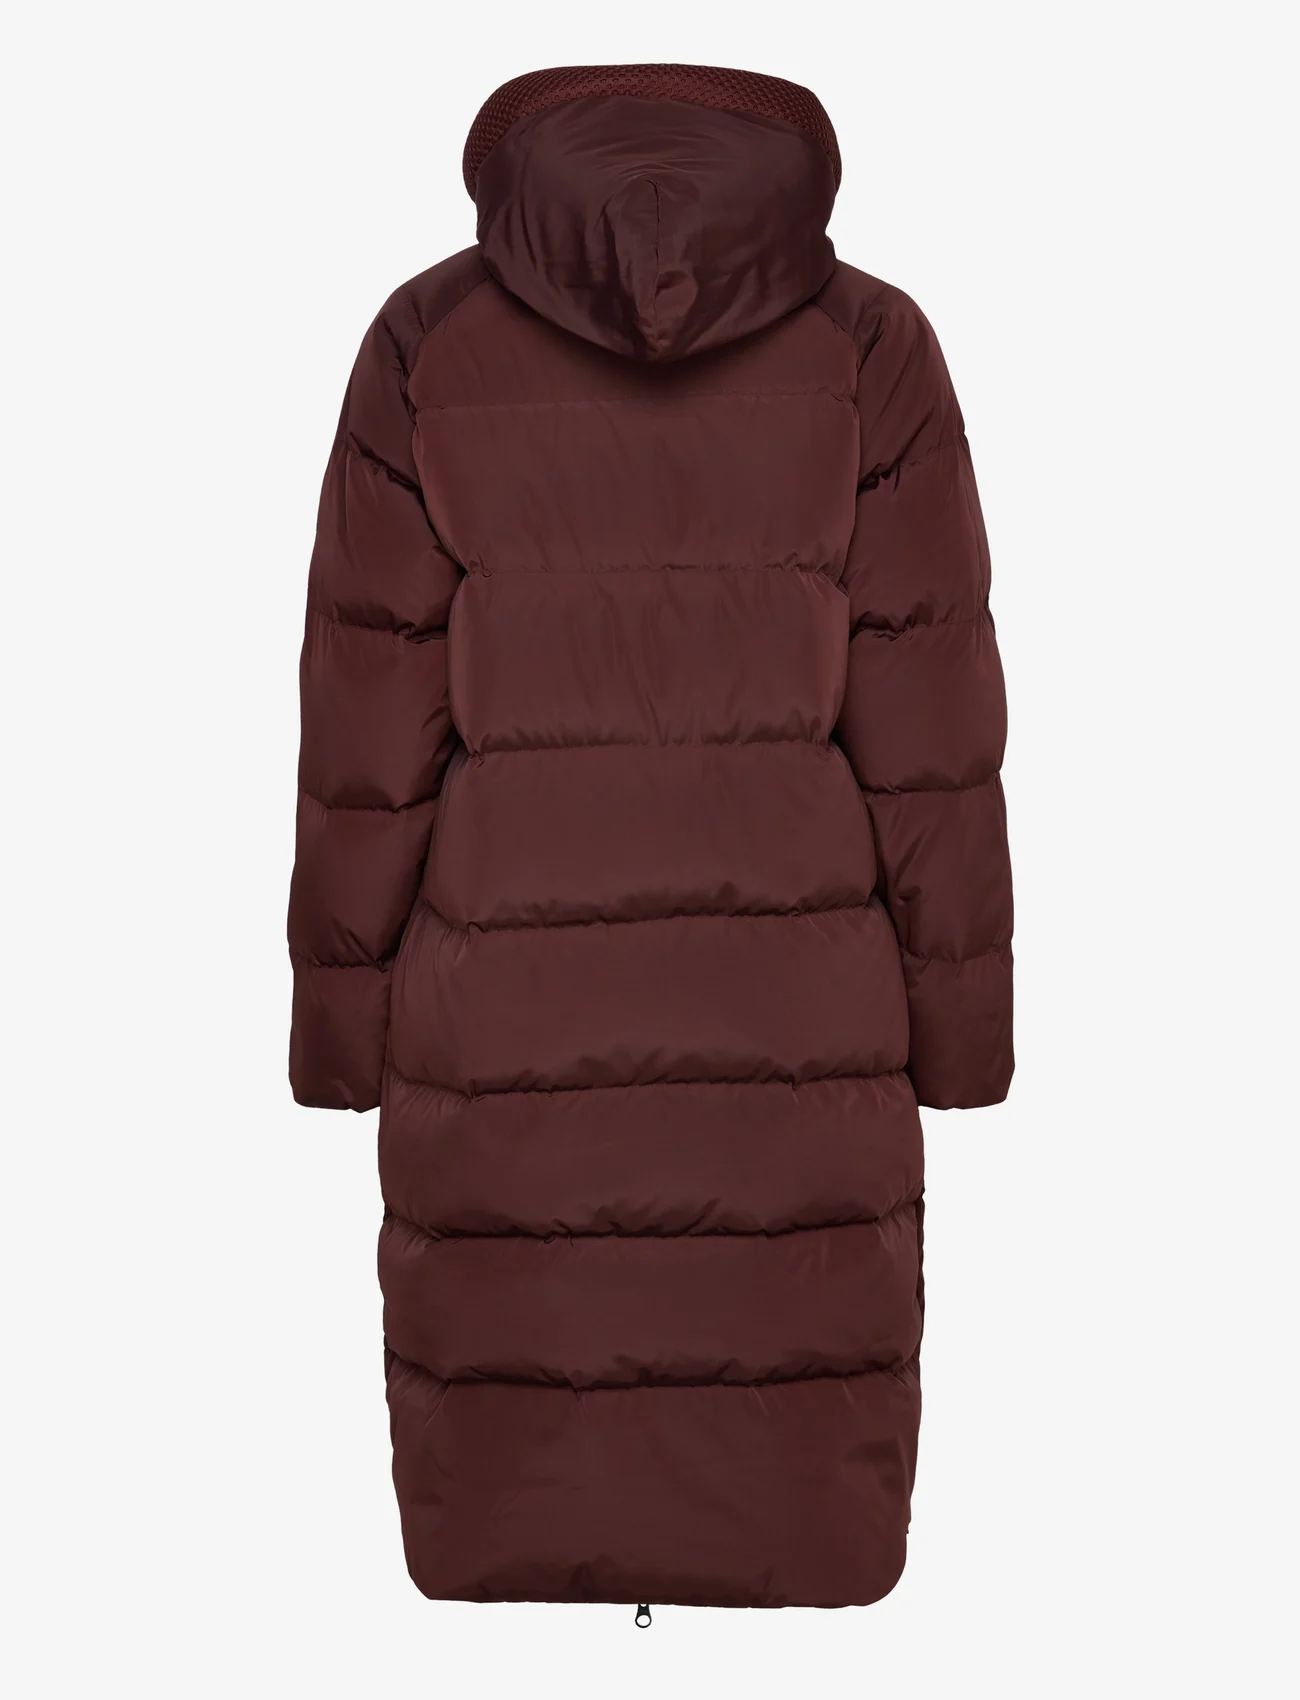 Peak Performance - W Stella Coat - winter coats - sapote - 1